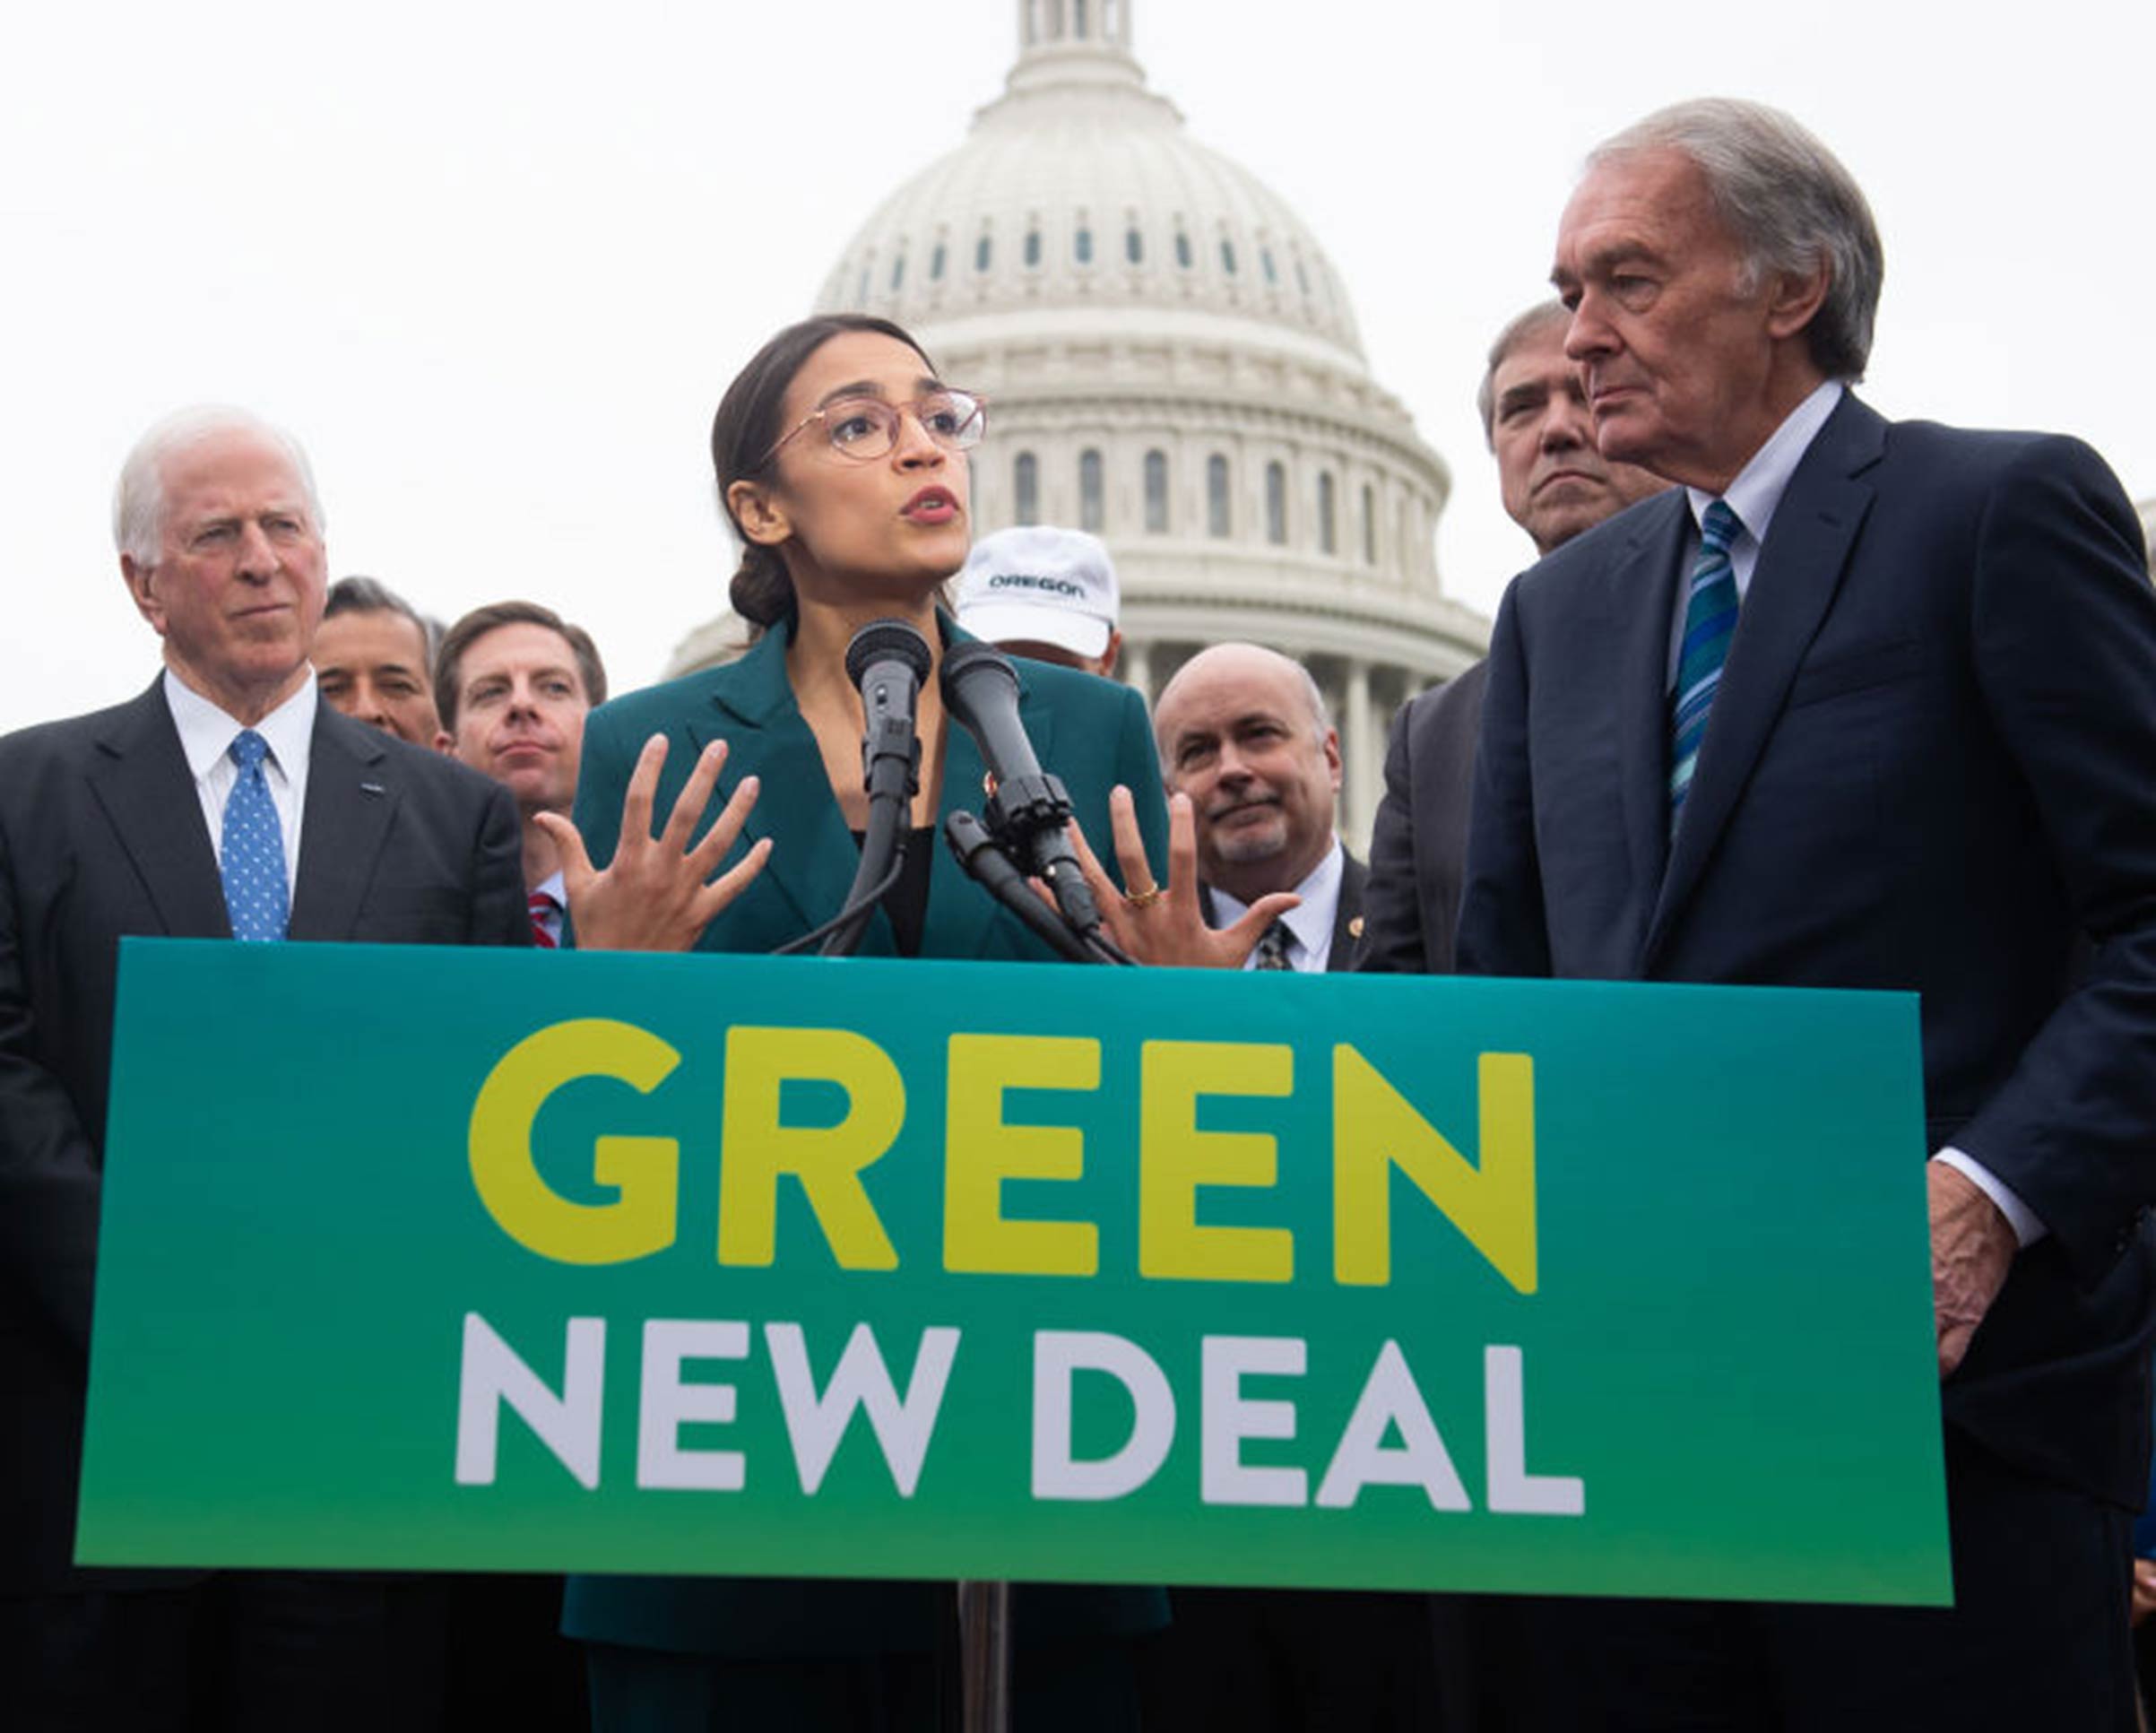 Green New Deal negli Stati Uniti d'America